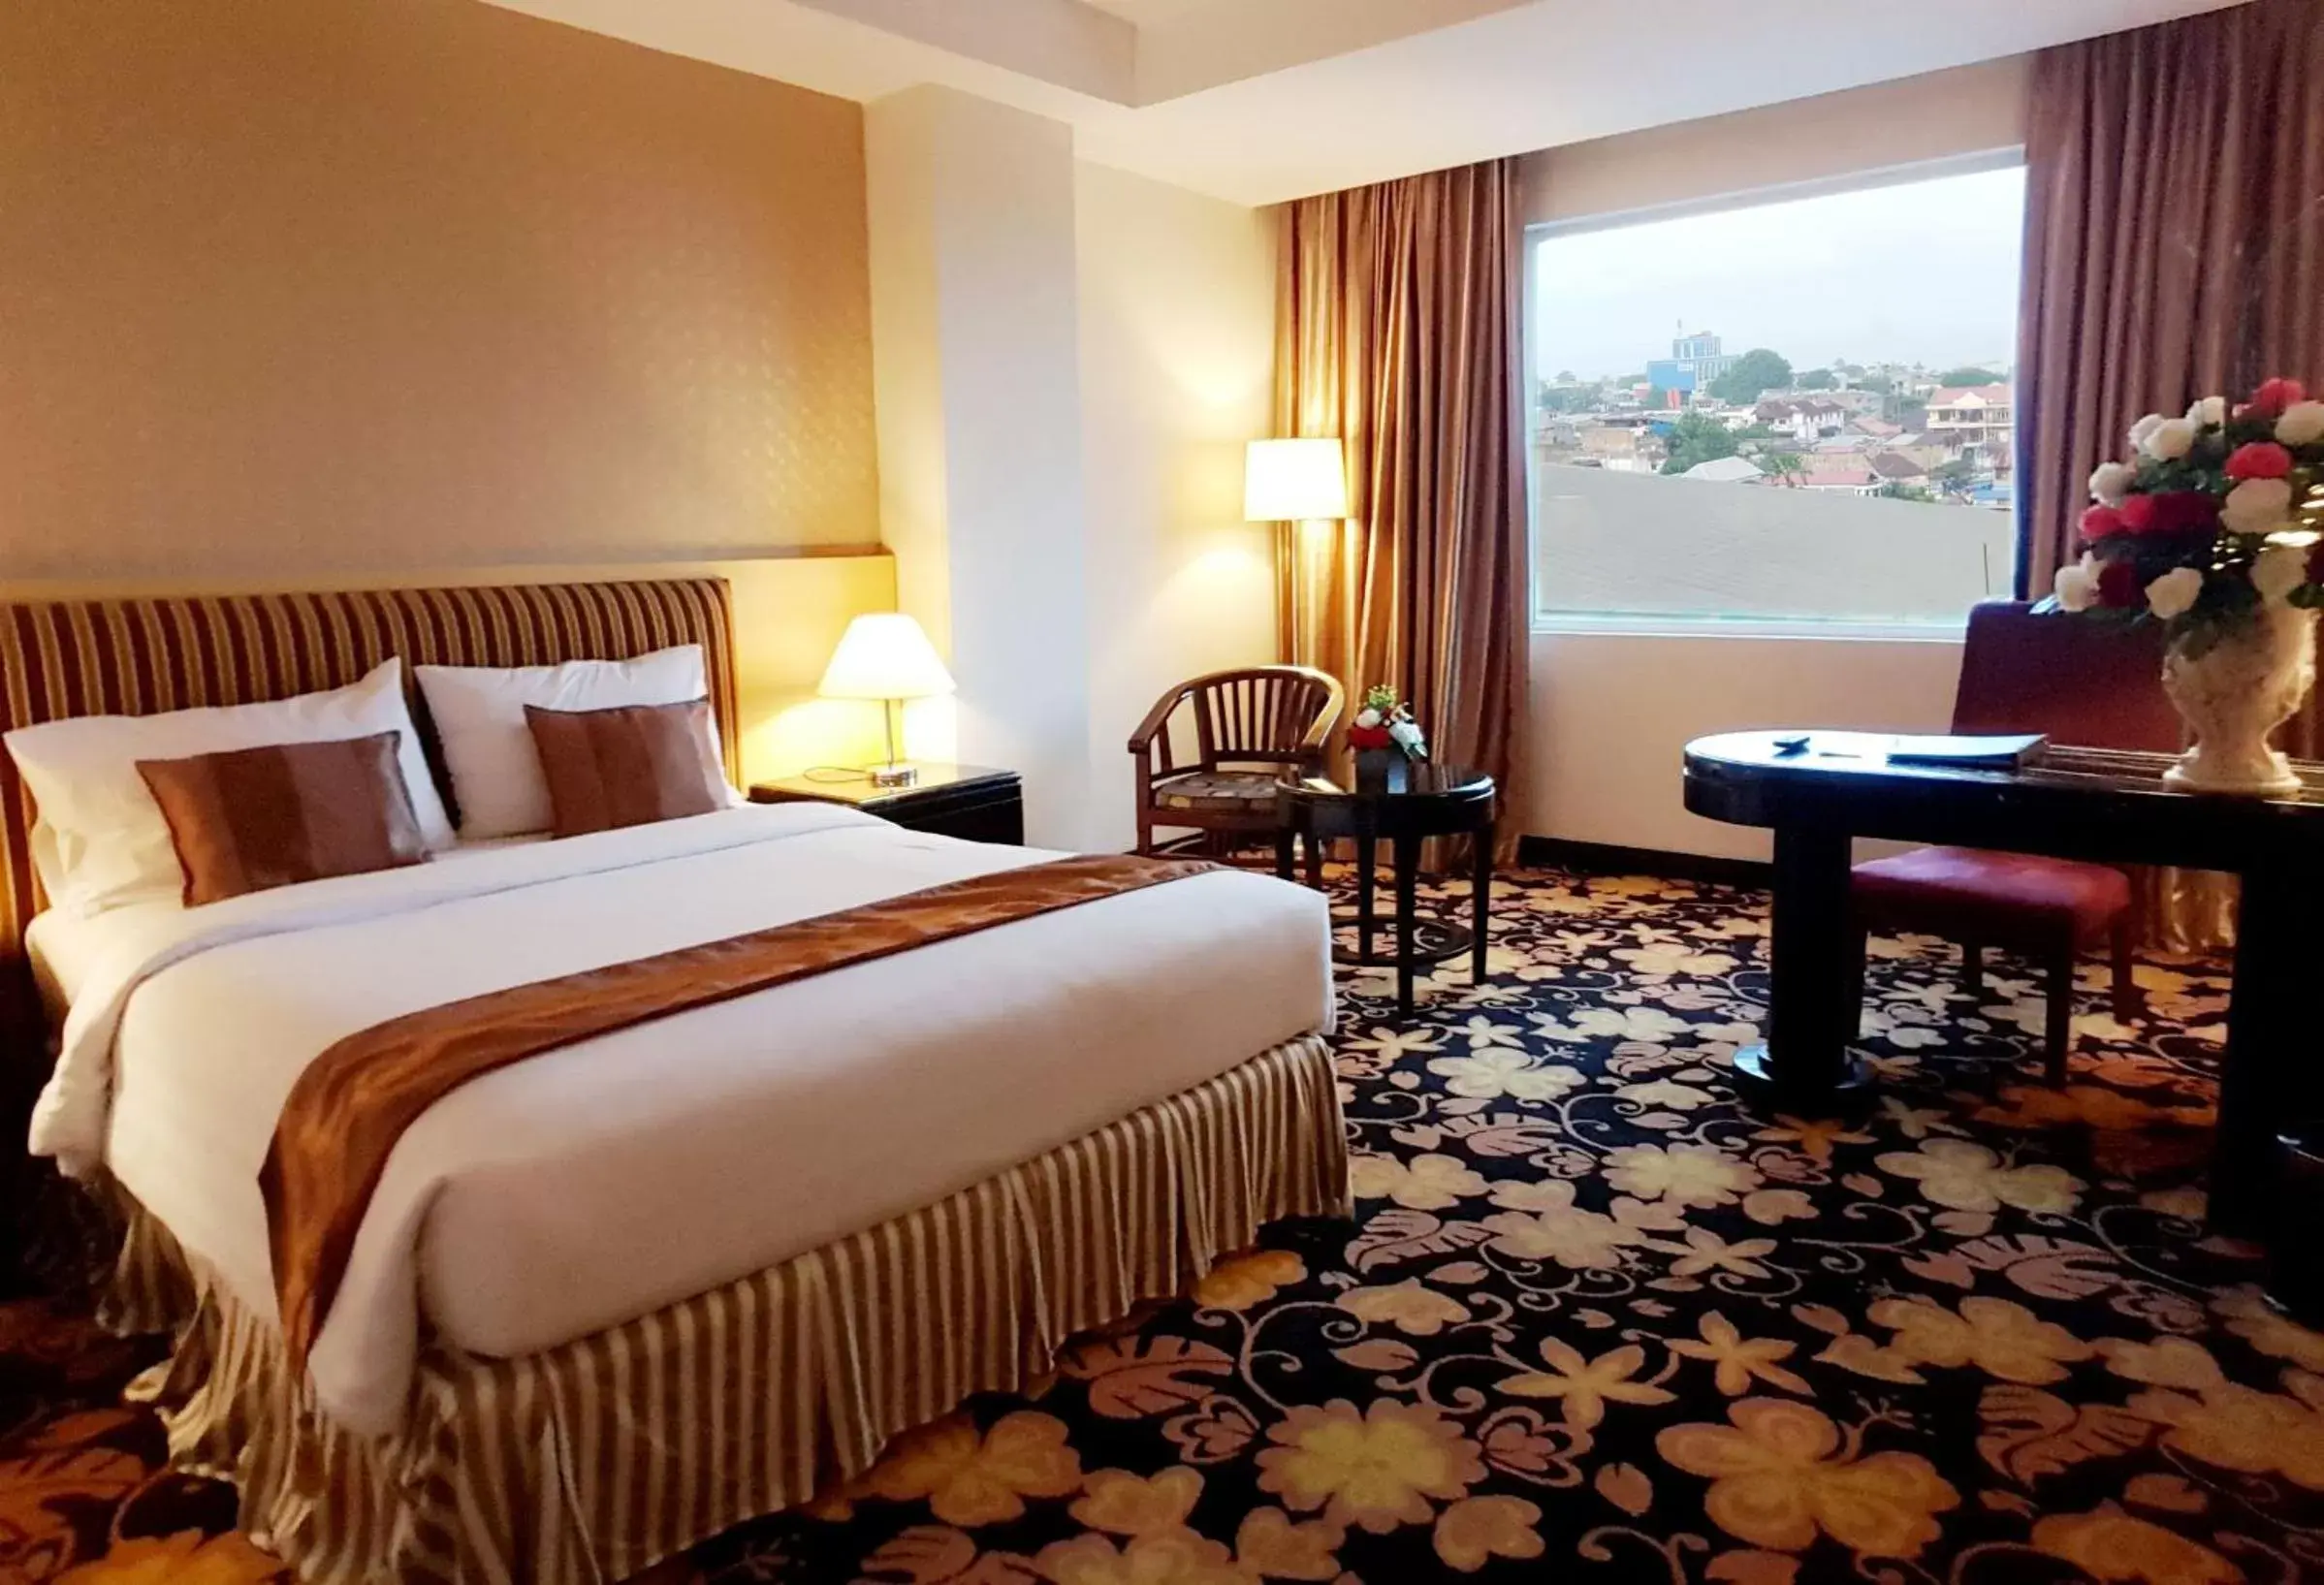 Bedroom, Room Photo in Rocky Plaza Hotel Padang